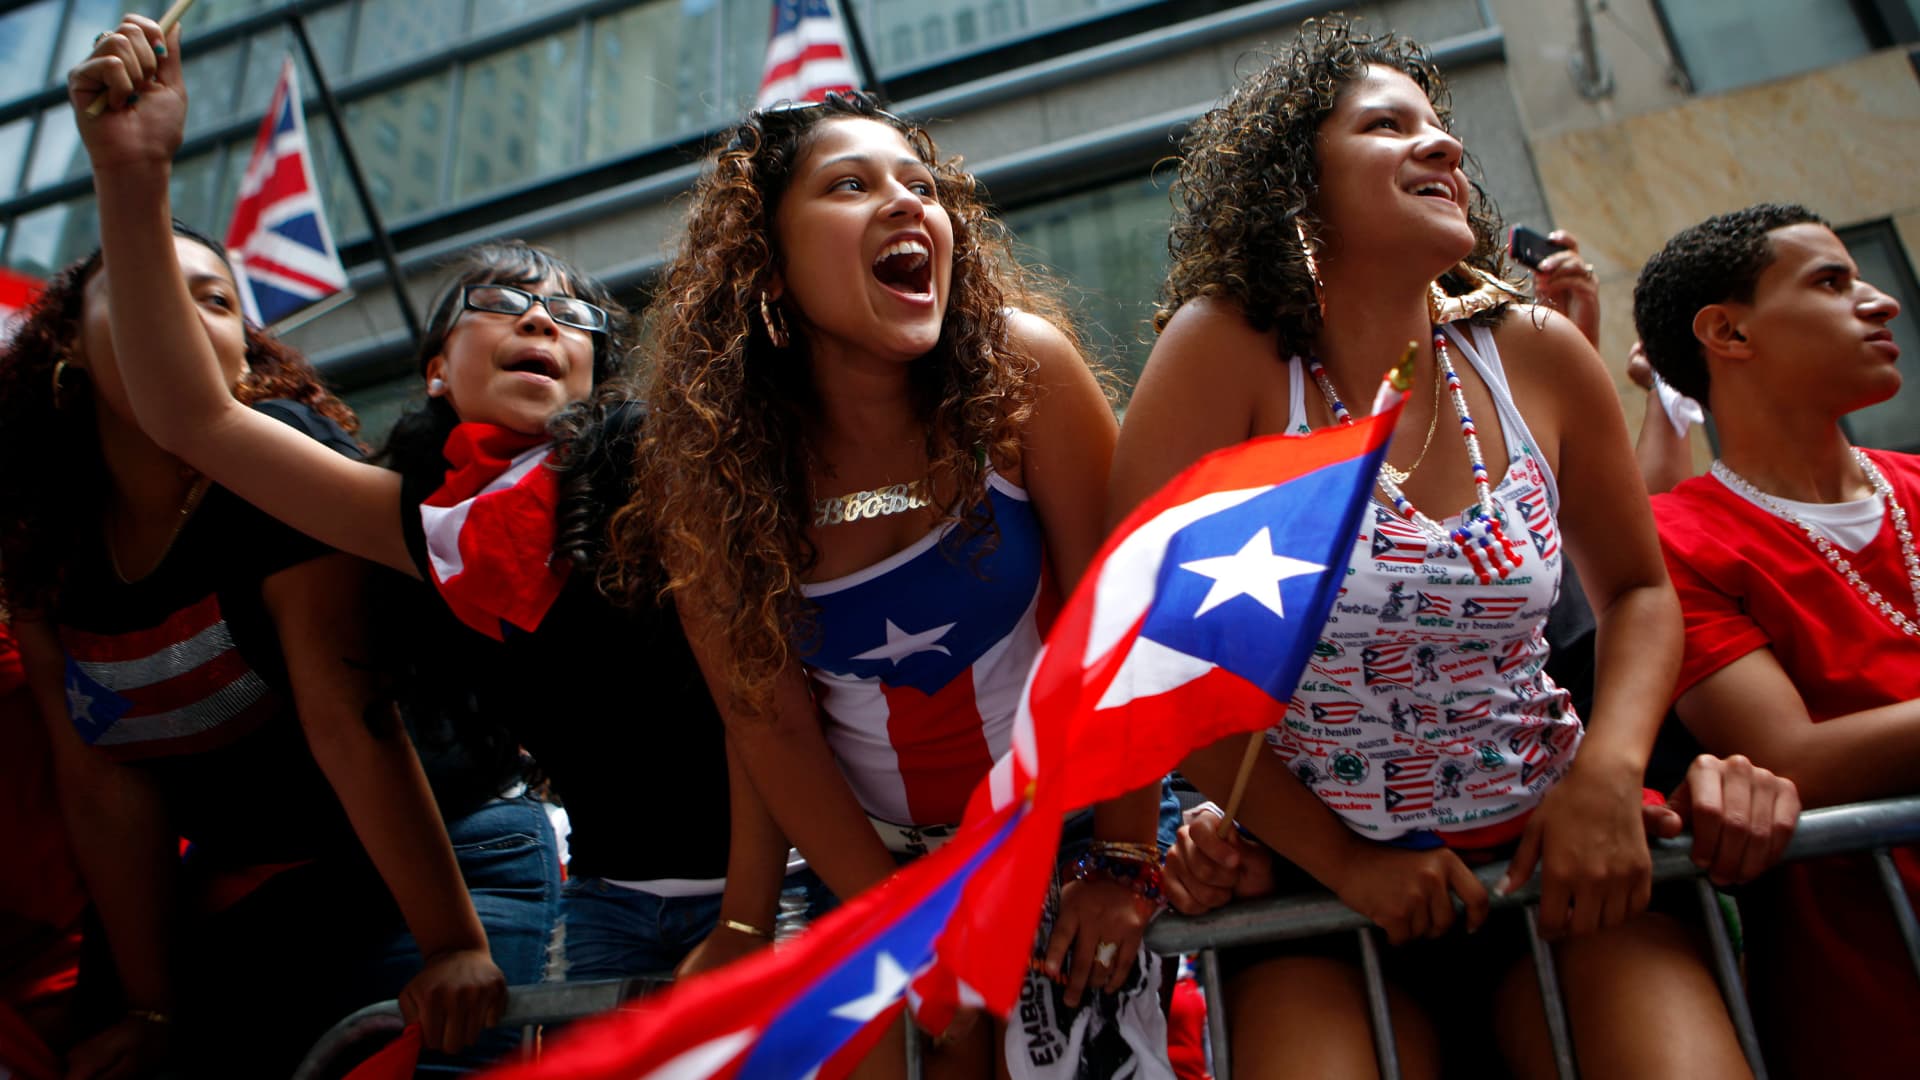 U.S. Latino economic output grows to $3.2 trillion, new study says